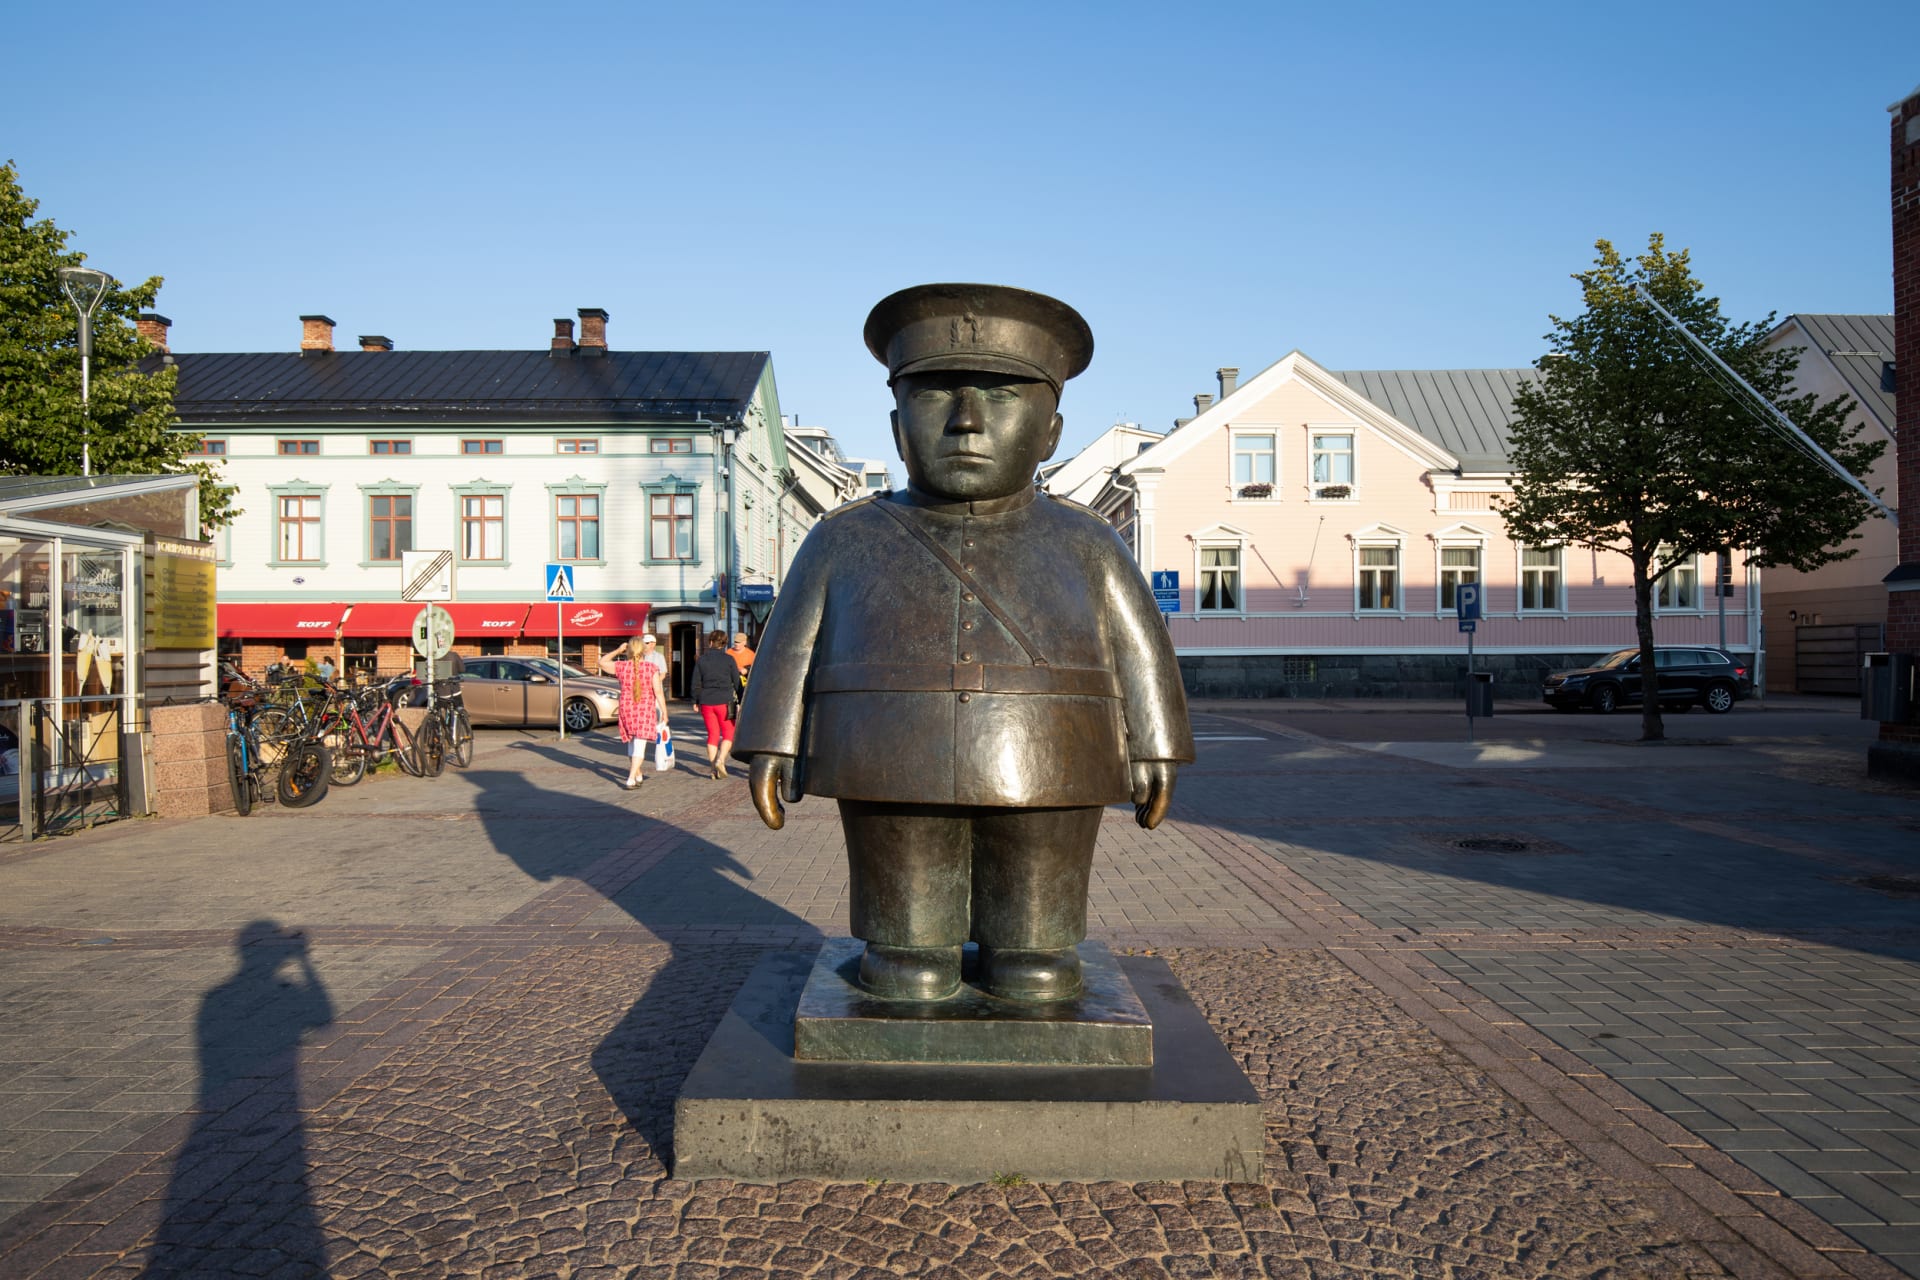 Toripolliisi statue in the Oulu Market Square.